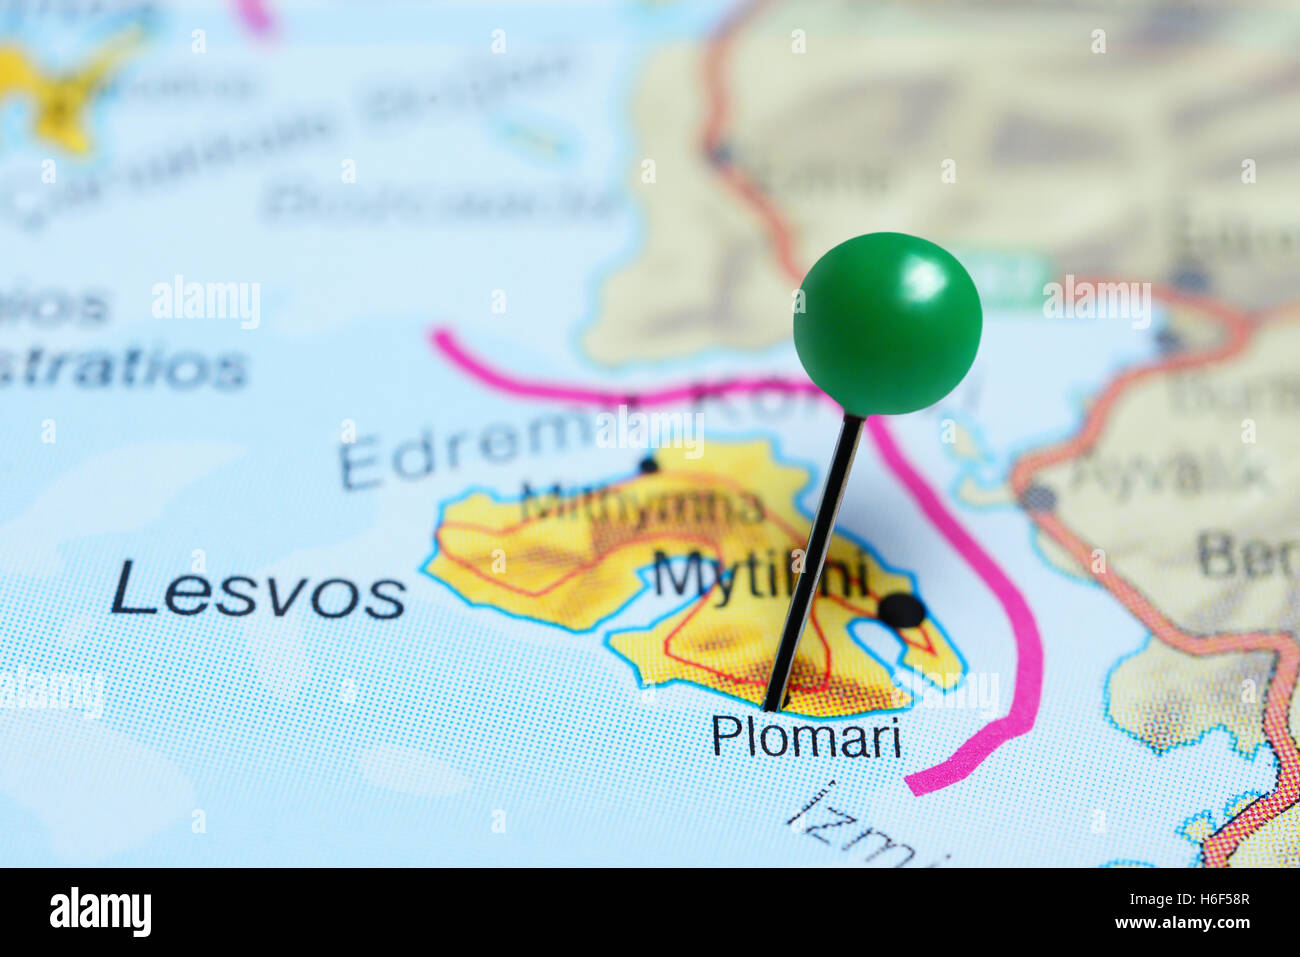 Plomari pinned on a map of Greece Stock Photo